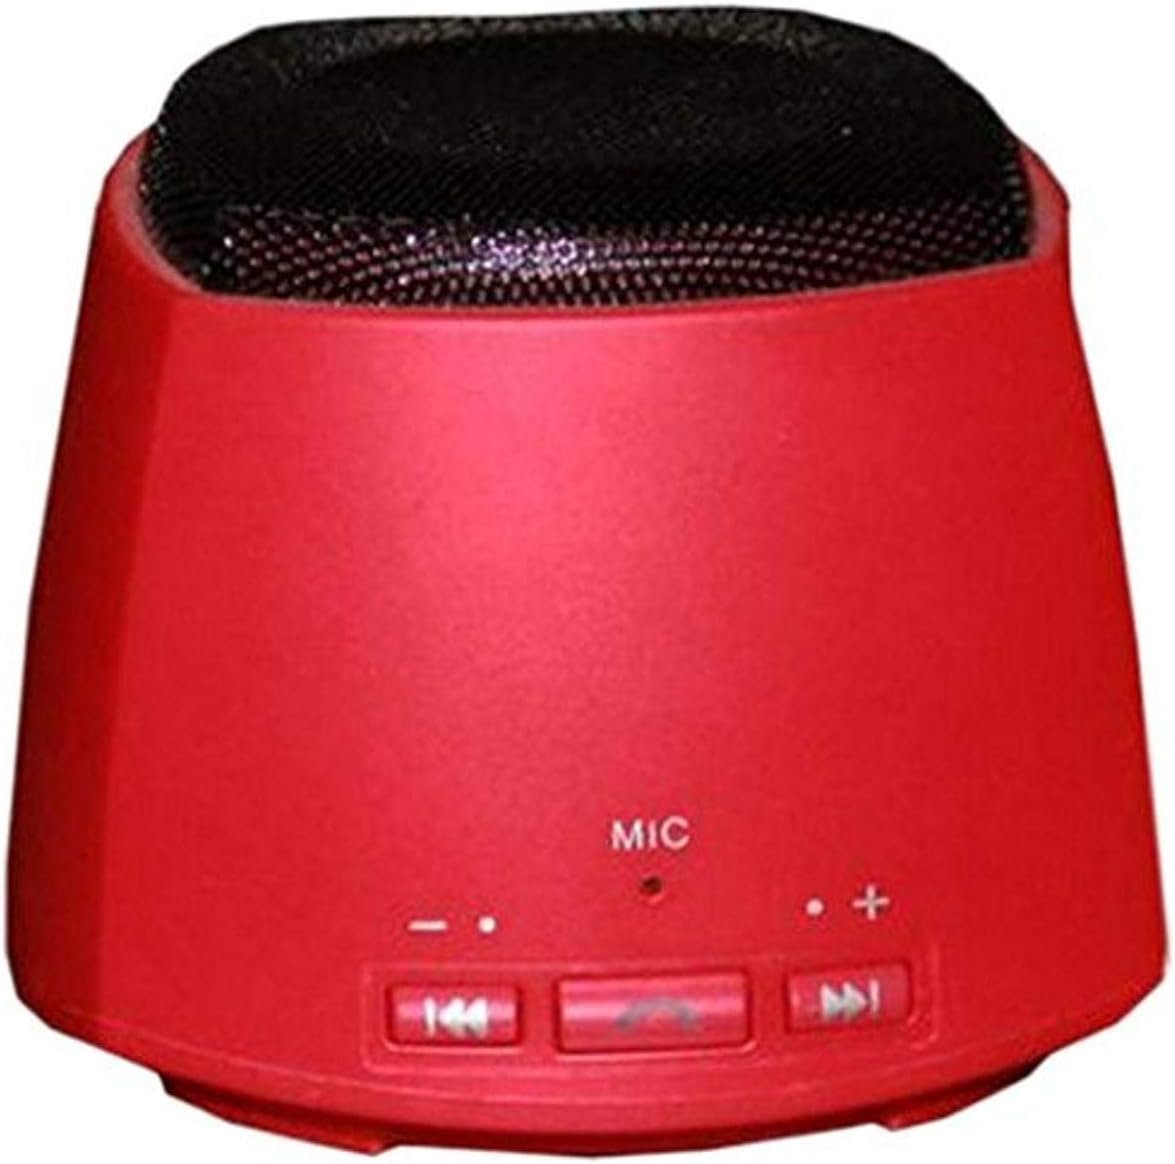 Nutek Bluetooth Wireless Portable Speaker, BT106M3, Red, 14.00 x 7.00 x 17.32 - image 1 of 1